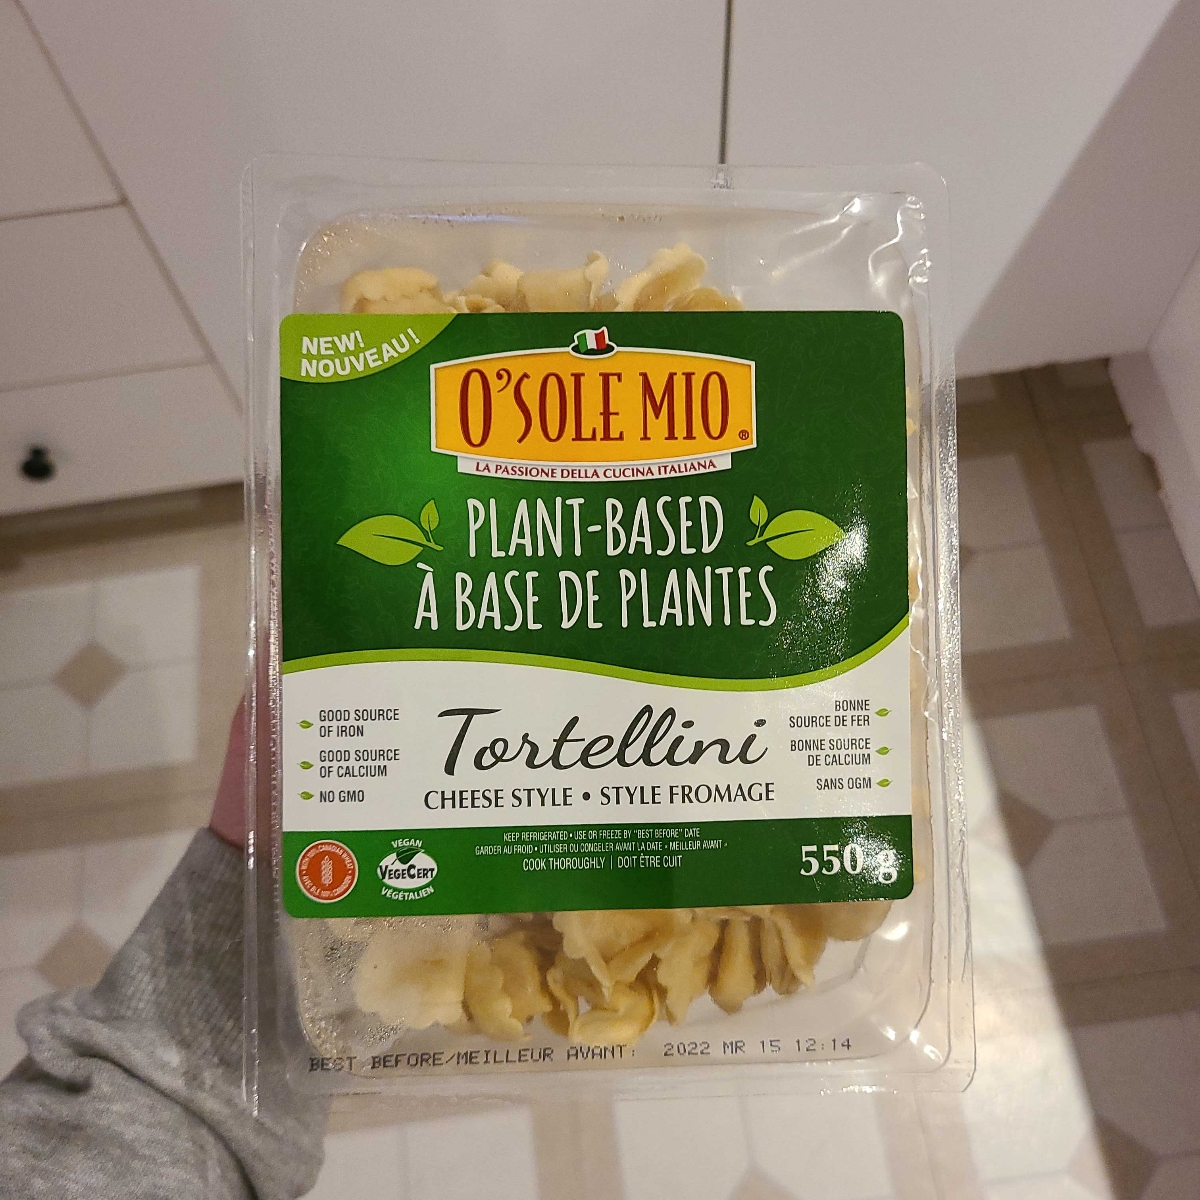 O'sole mio Vegan Tortellini Cheese Style Reviews | abillion